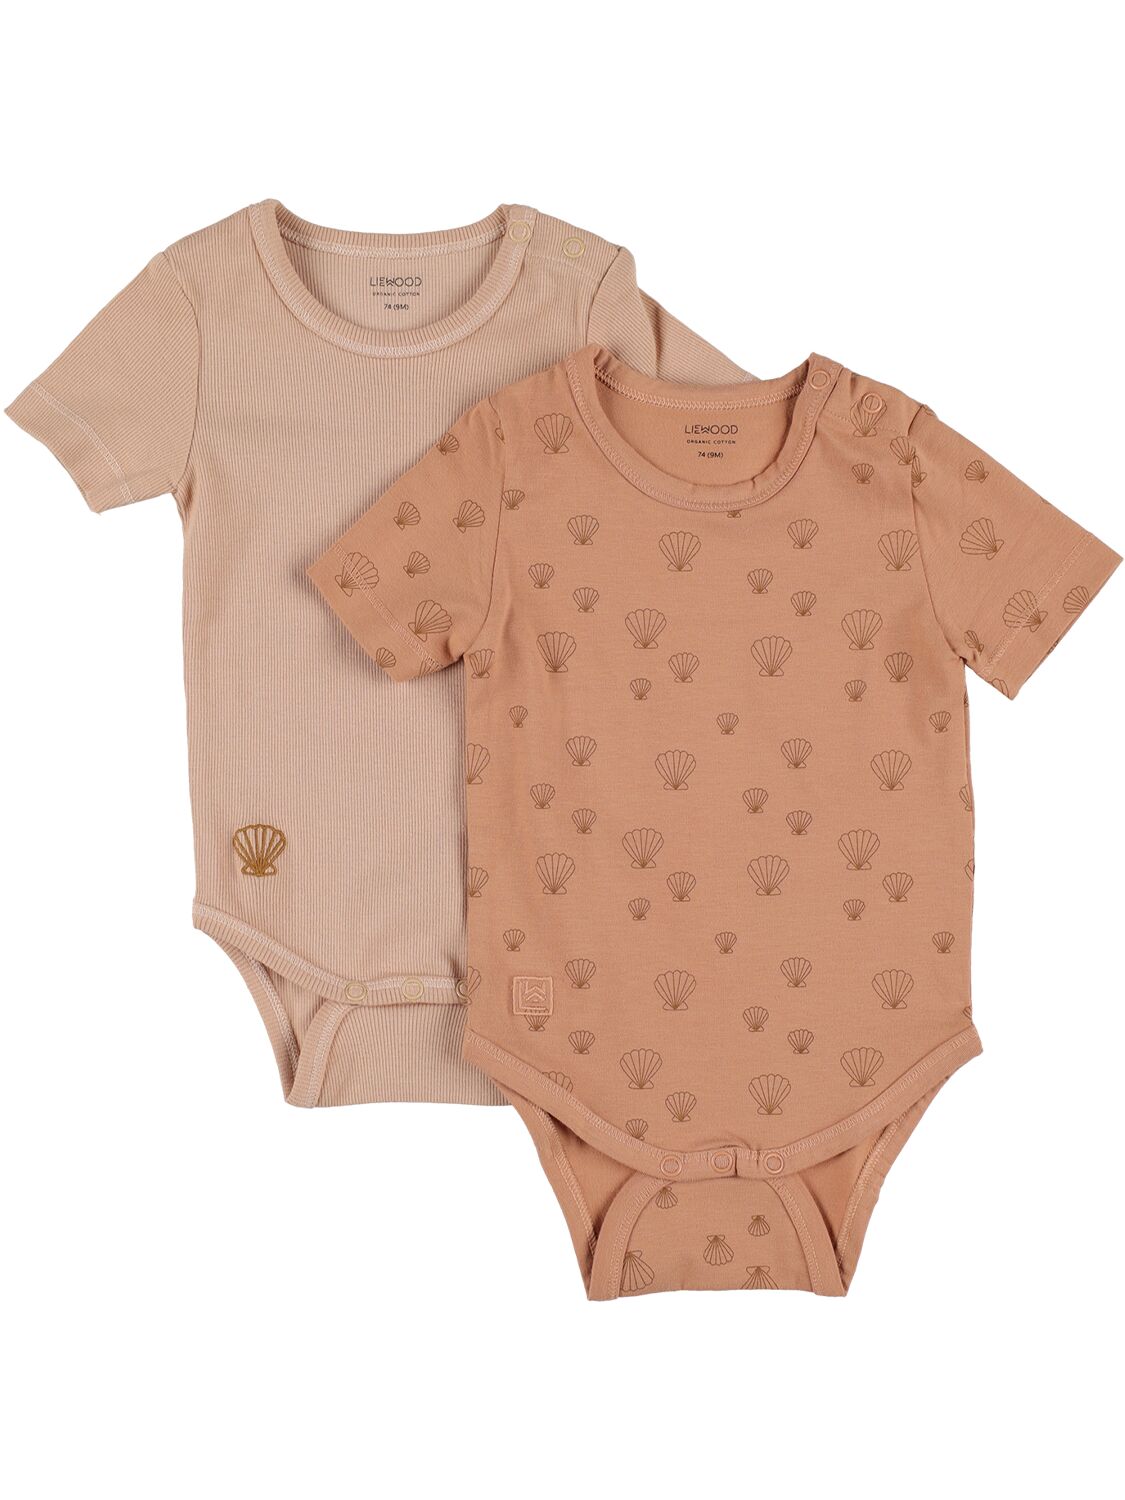 Liewood Babies' Set Of 2 Organic Cotton Bodysuits In Dark Pink